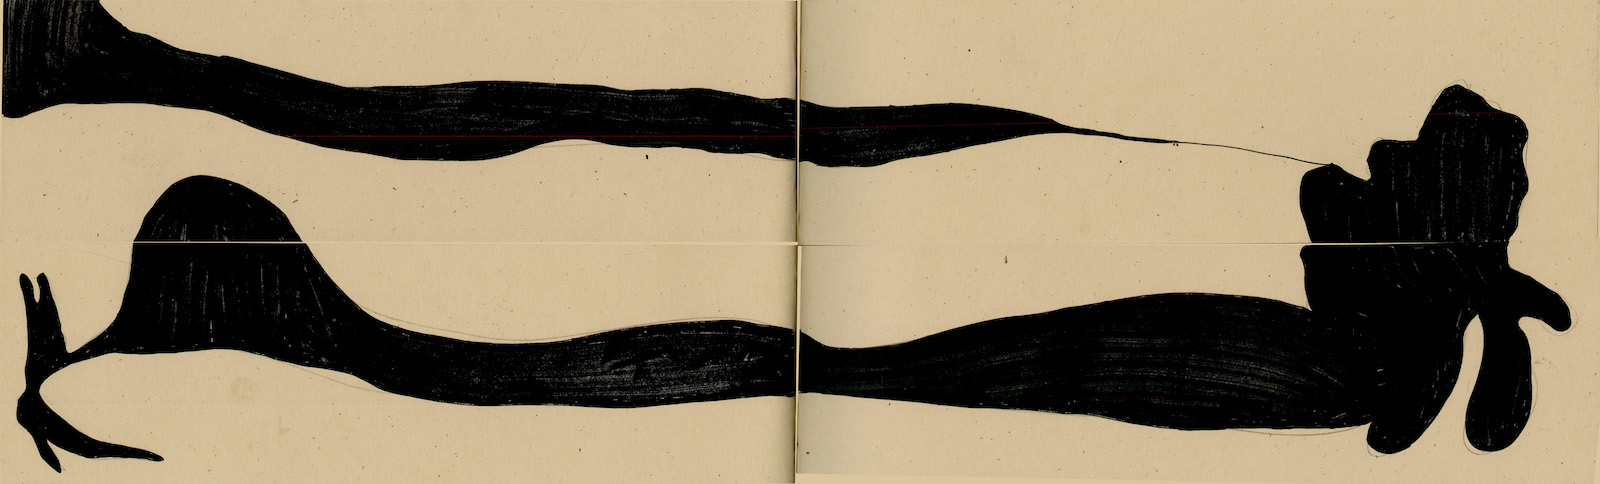 River Book I(Top), River Book II(Bottom), Page 13, No-Name Rivers